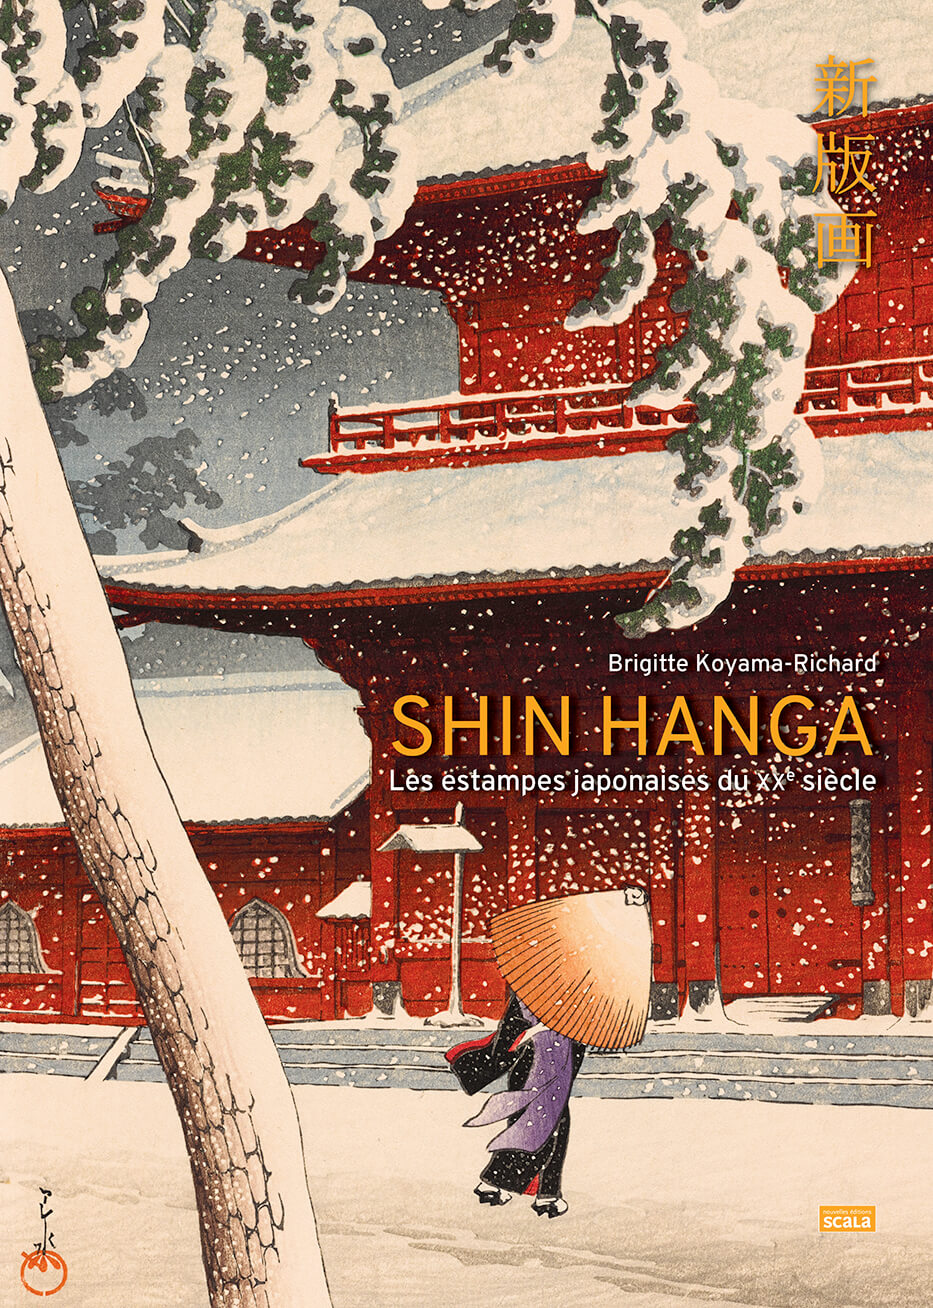 Shin-hanga, Breathing New Life into Prints in the 20th Century